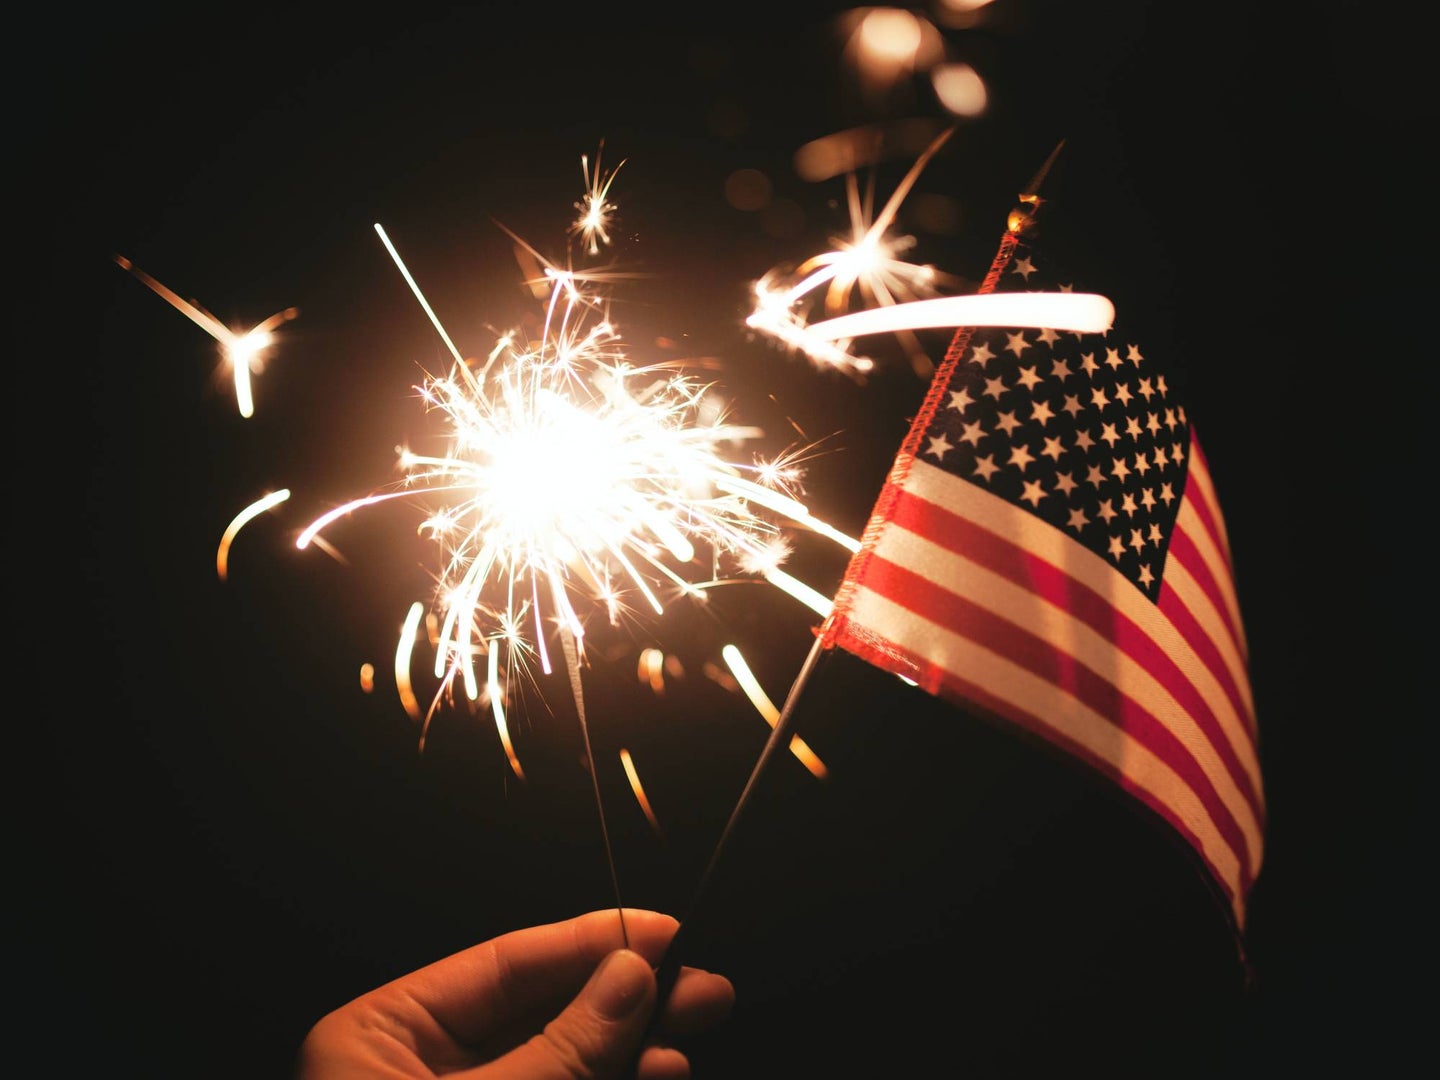 Hand holding firework and american flag against dark night